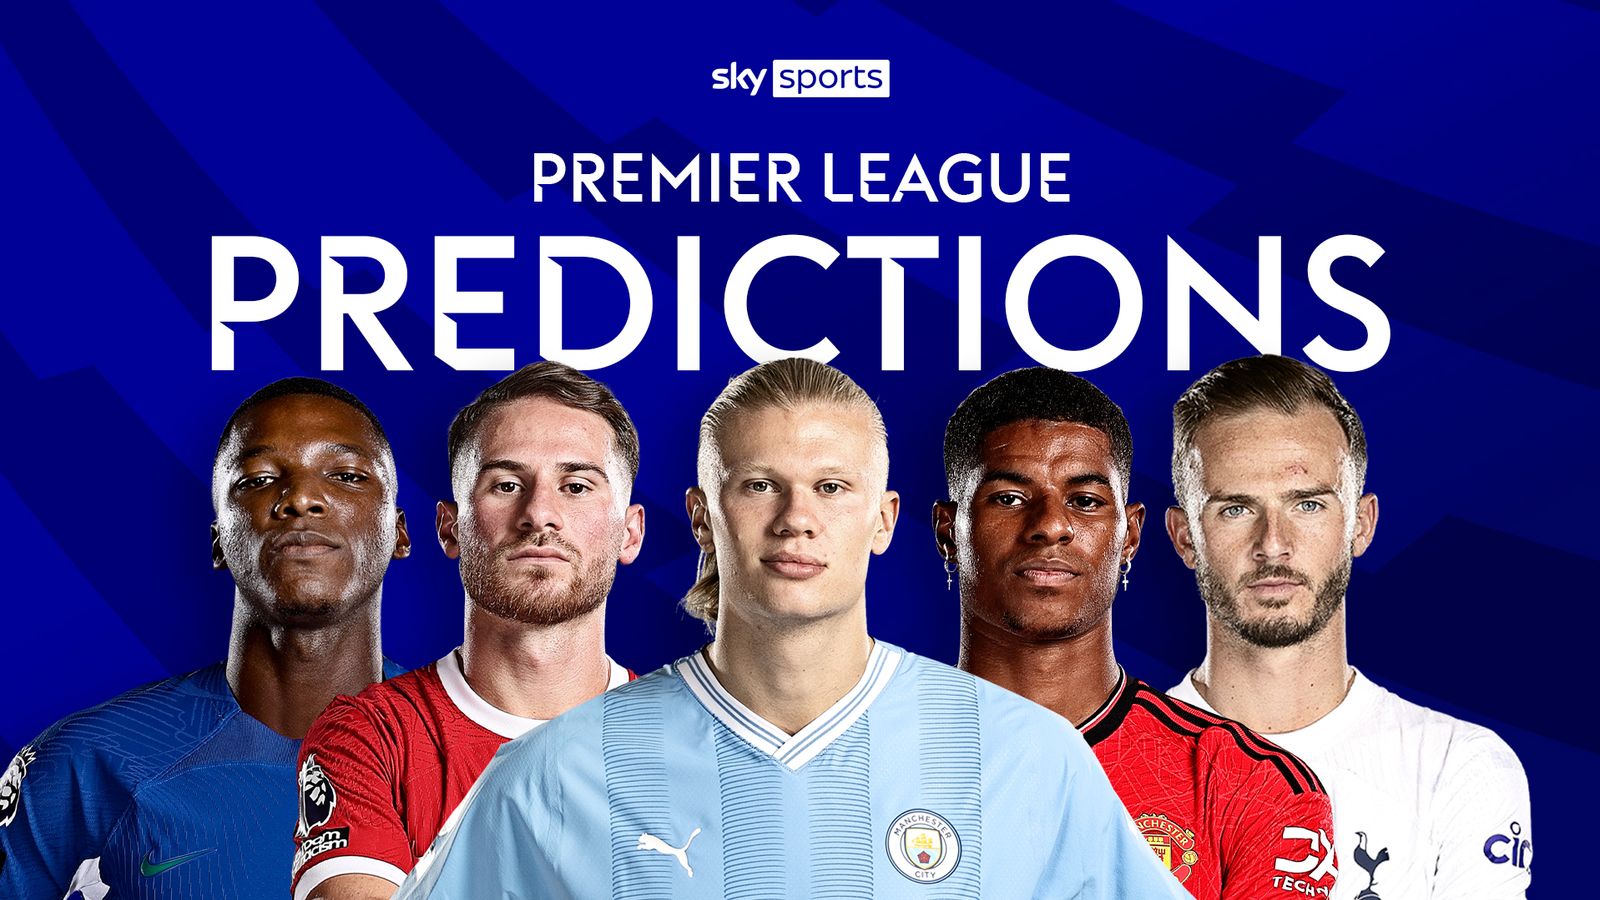 Premier League predictions Back goals to flow on Super Sunday when